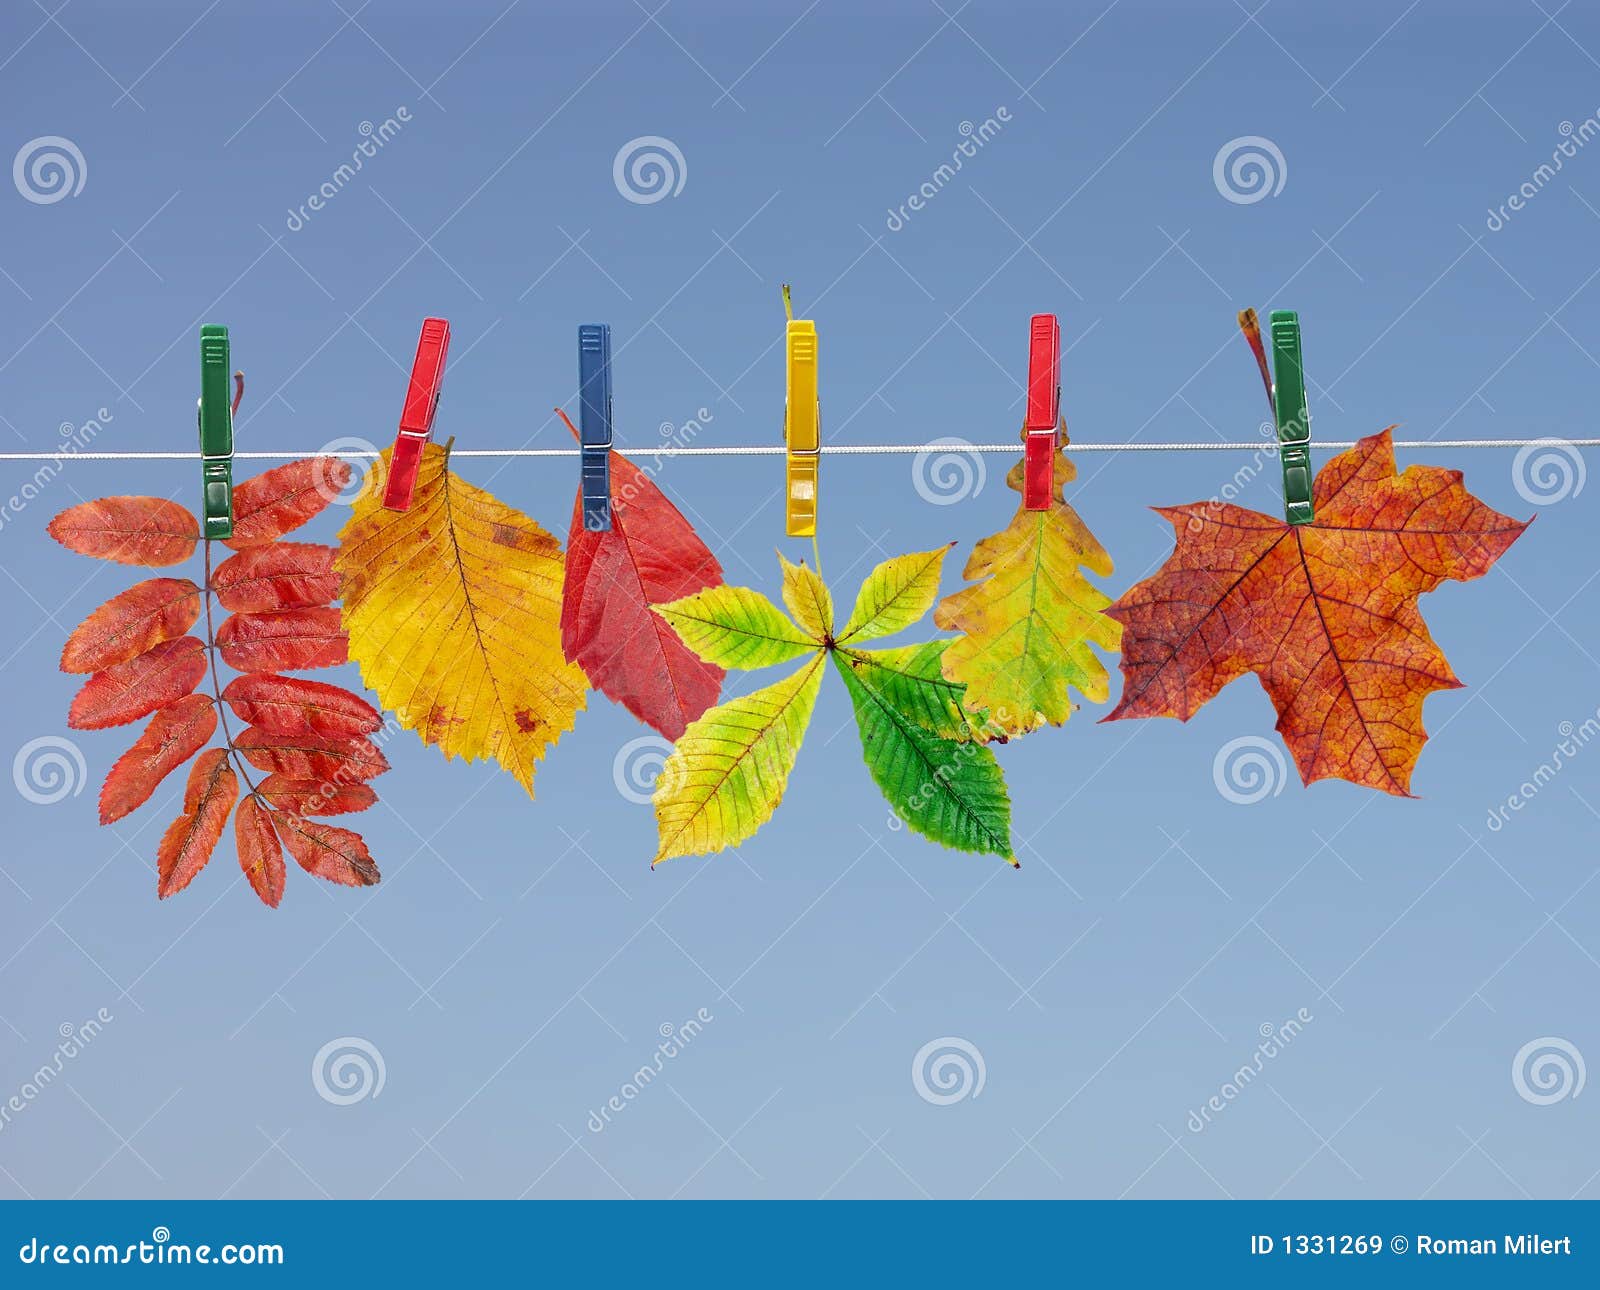 fall leaf drying